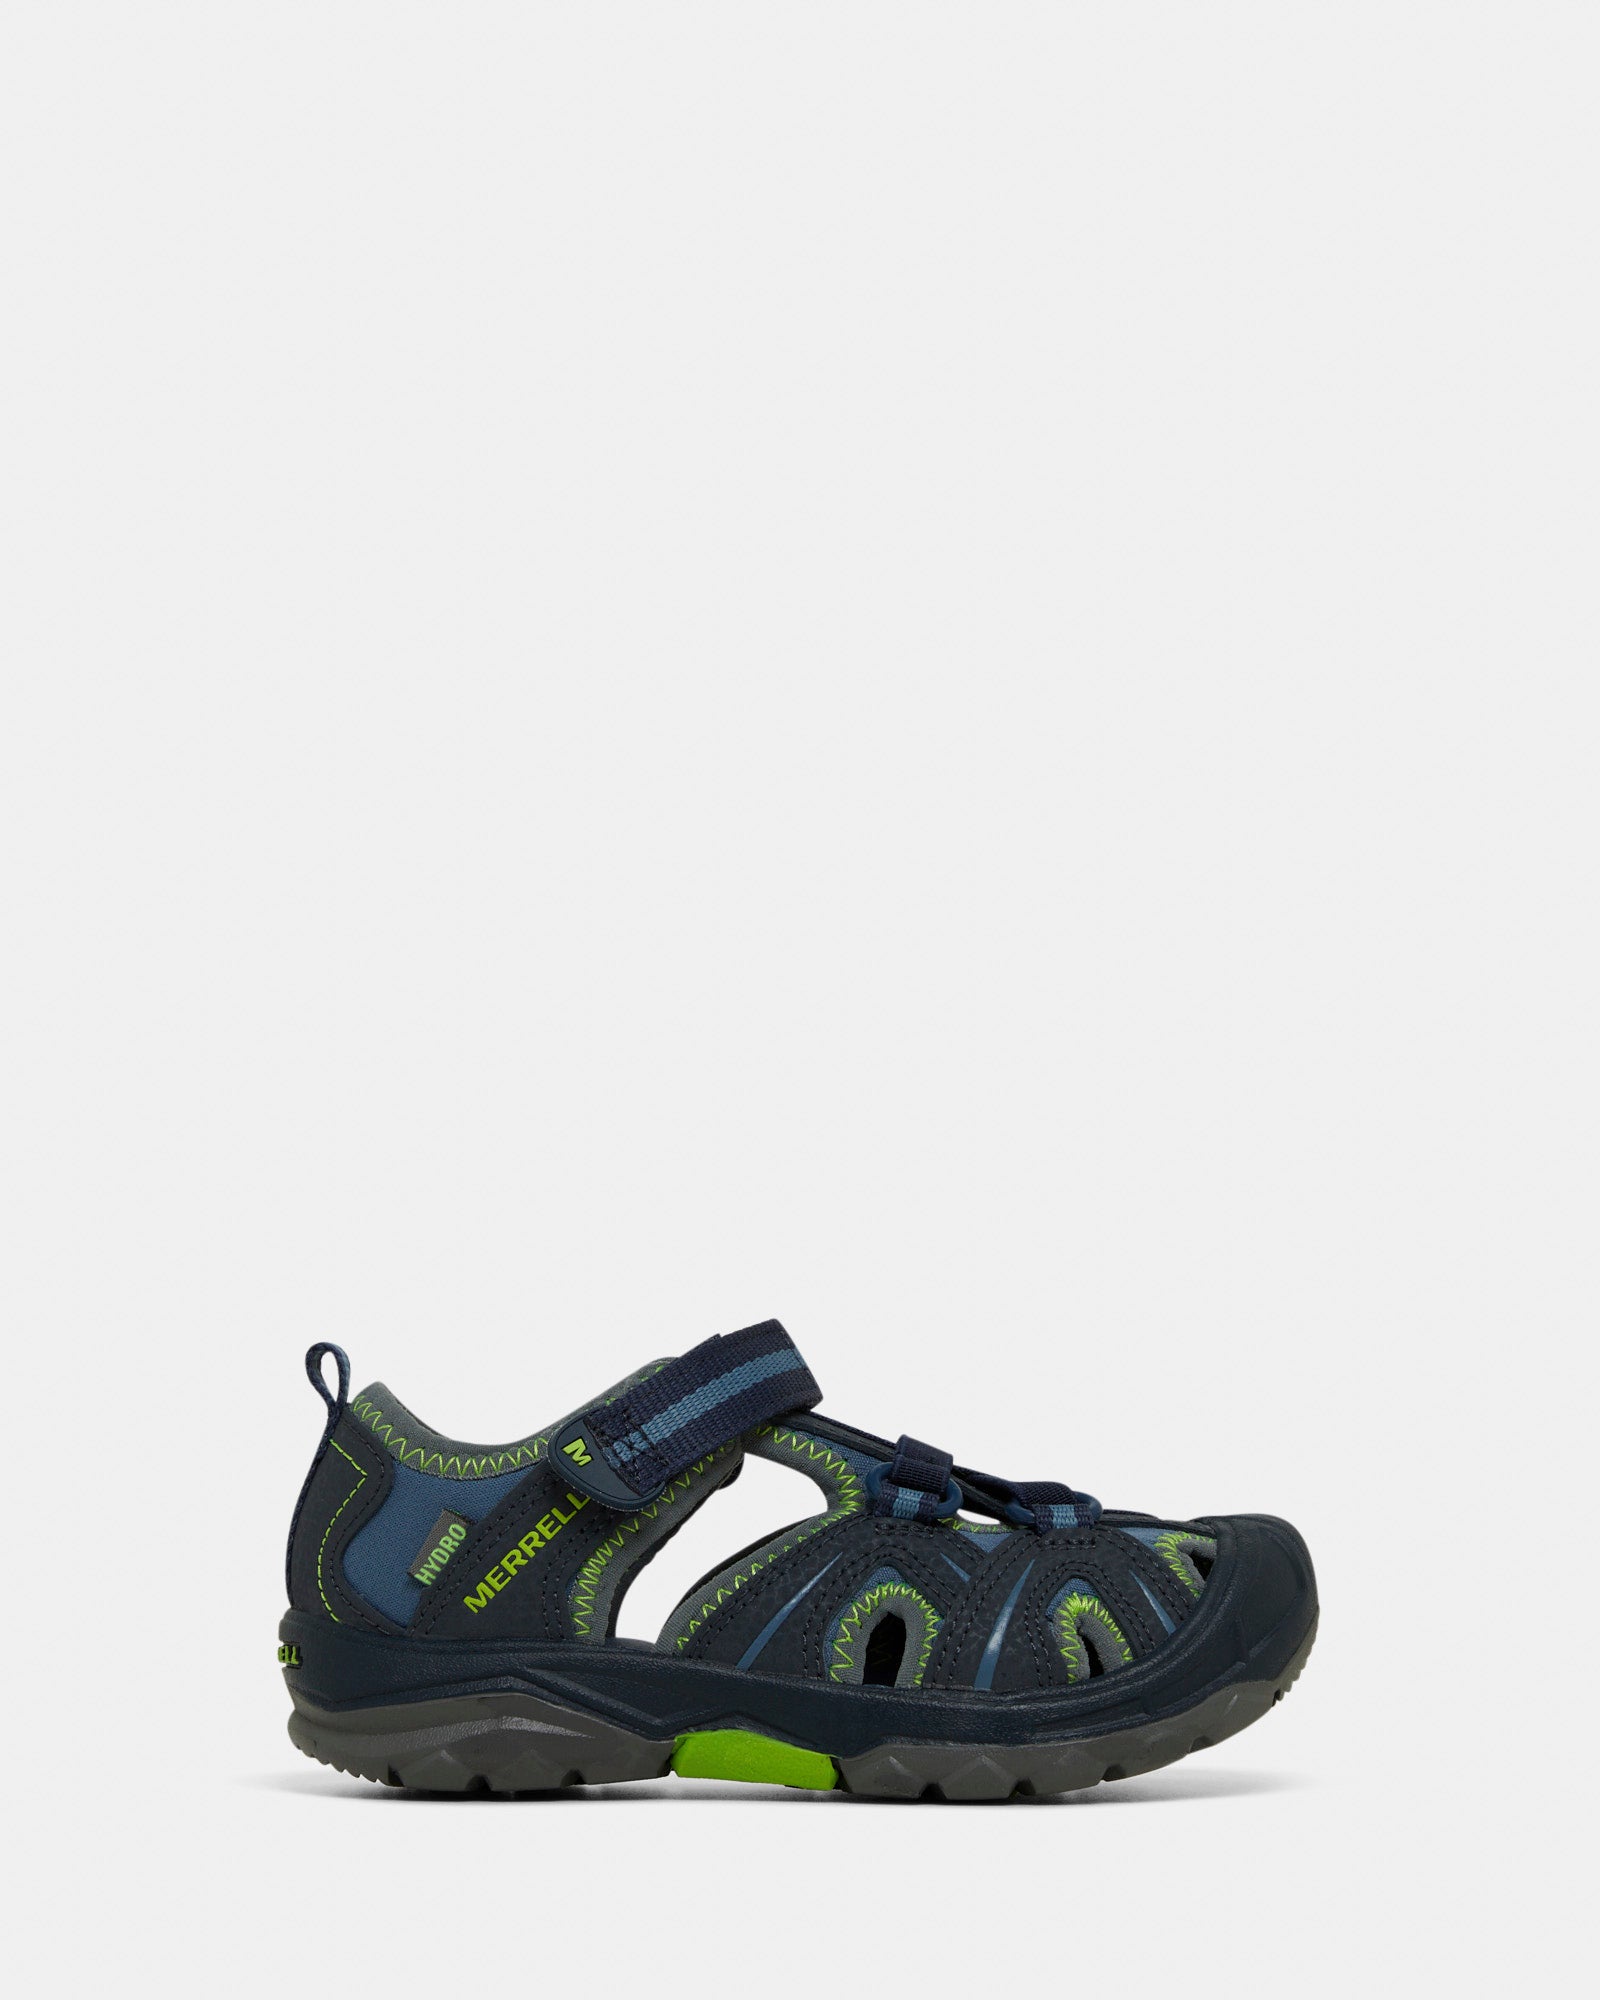 Hydro Sandals Navy/Green